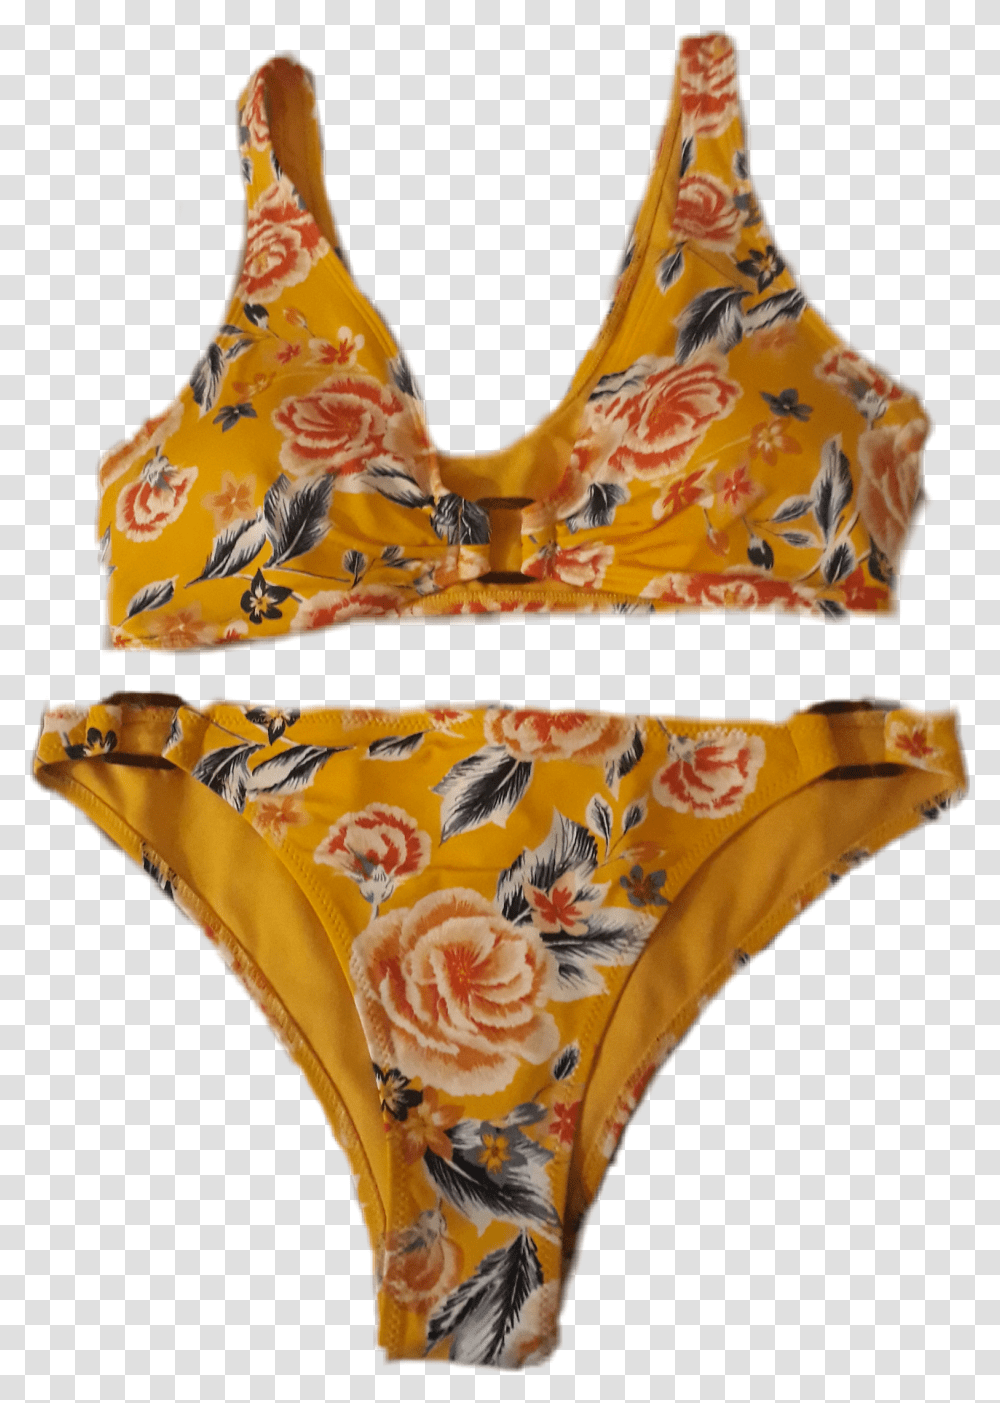 Bikini Bikinis Bikinibottom Bikinitop Yellowbikini Swimsuit Top, Apparel, Swimwear, Lingerie Transparent Png